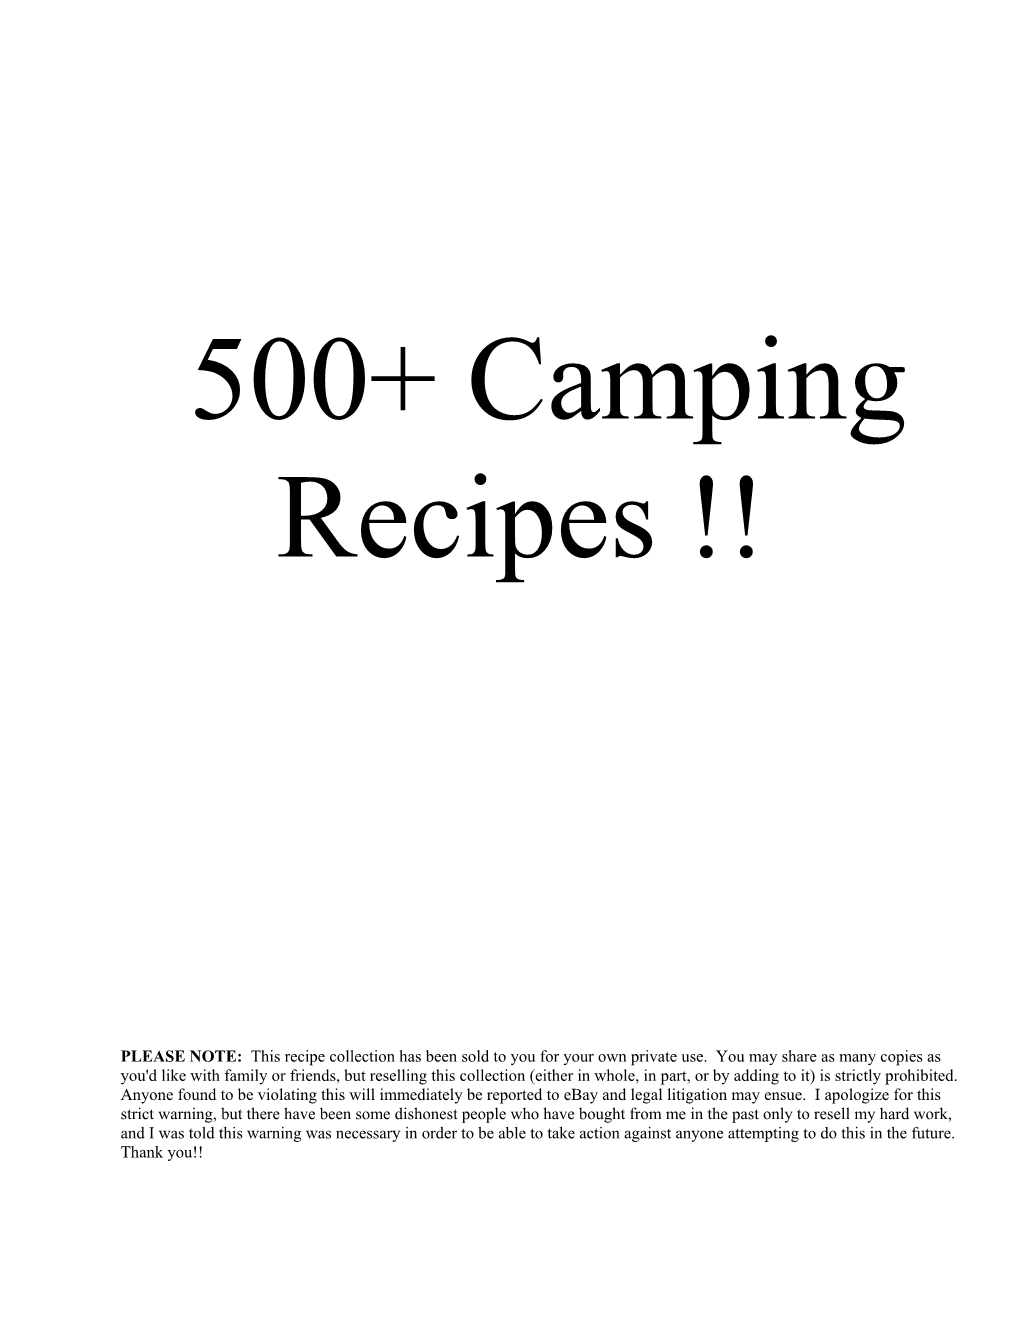 500+ Camping Recipes for Dutch Ovens